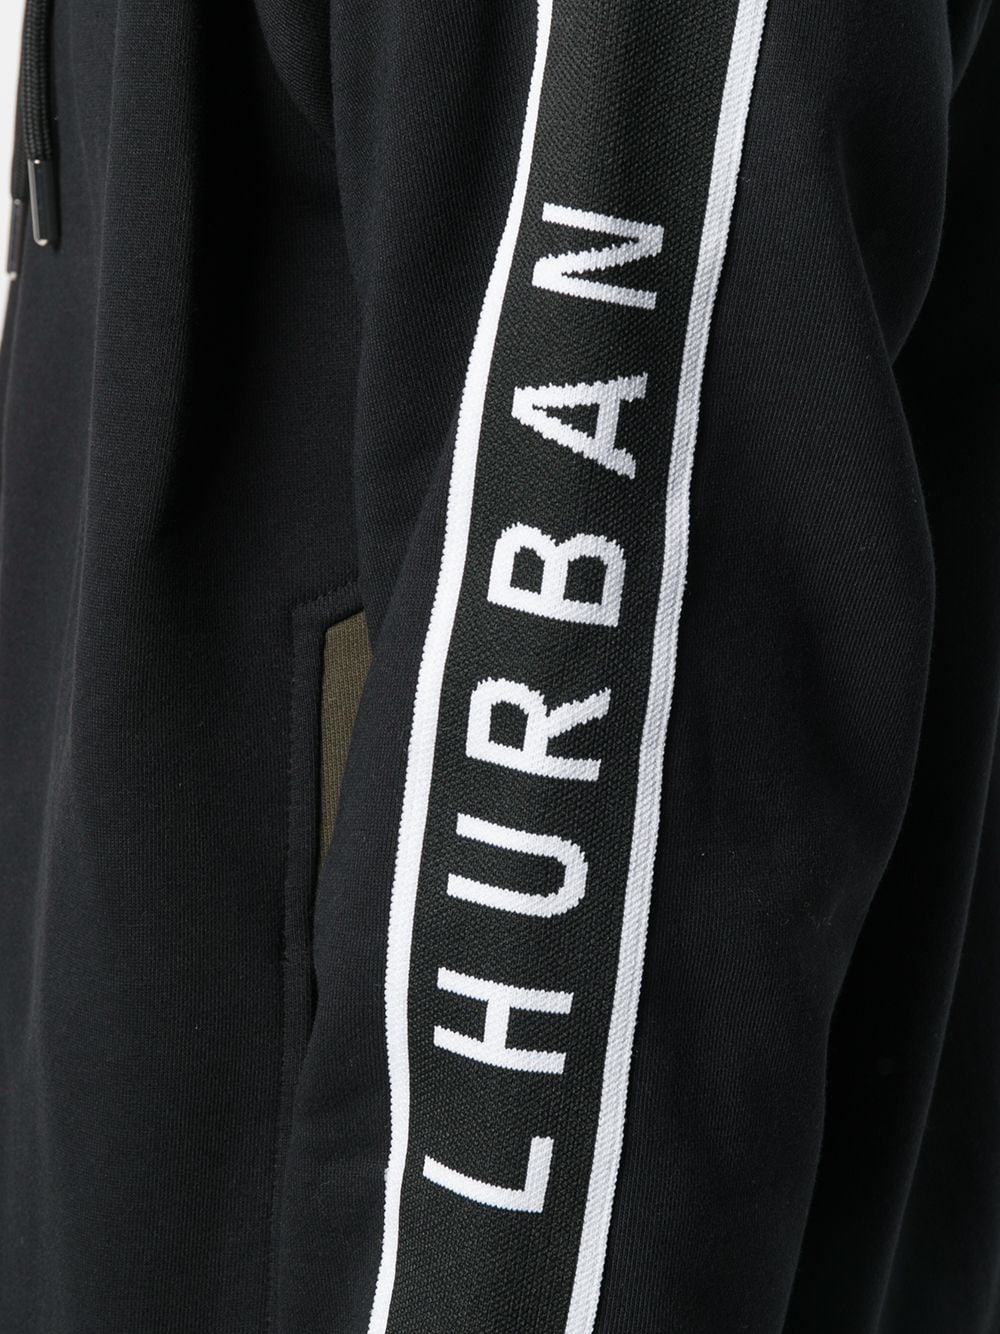 фото Les hommes urban куртка с логотипом lhurban на рукавах